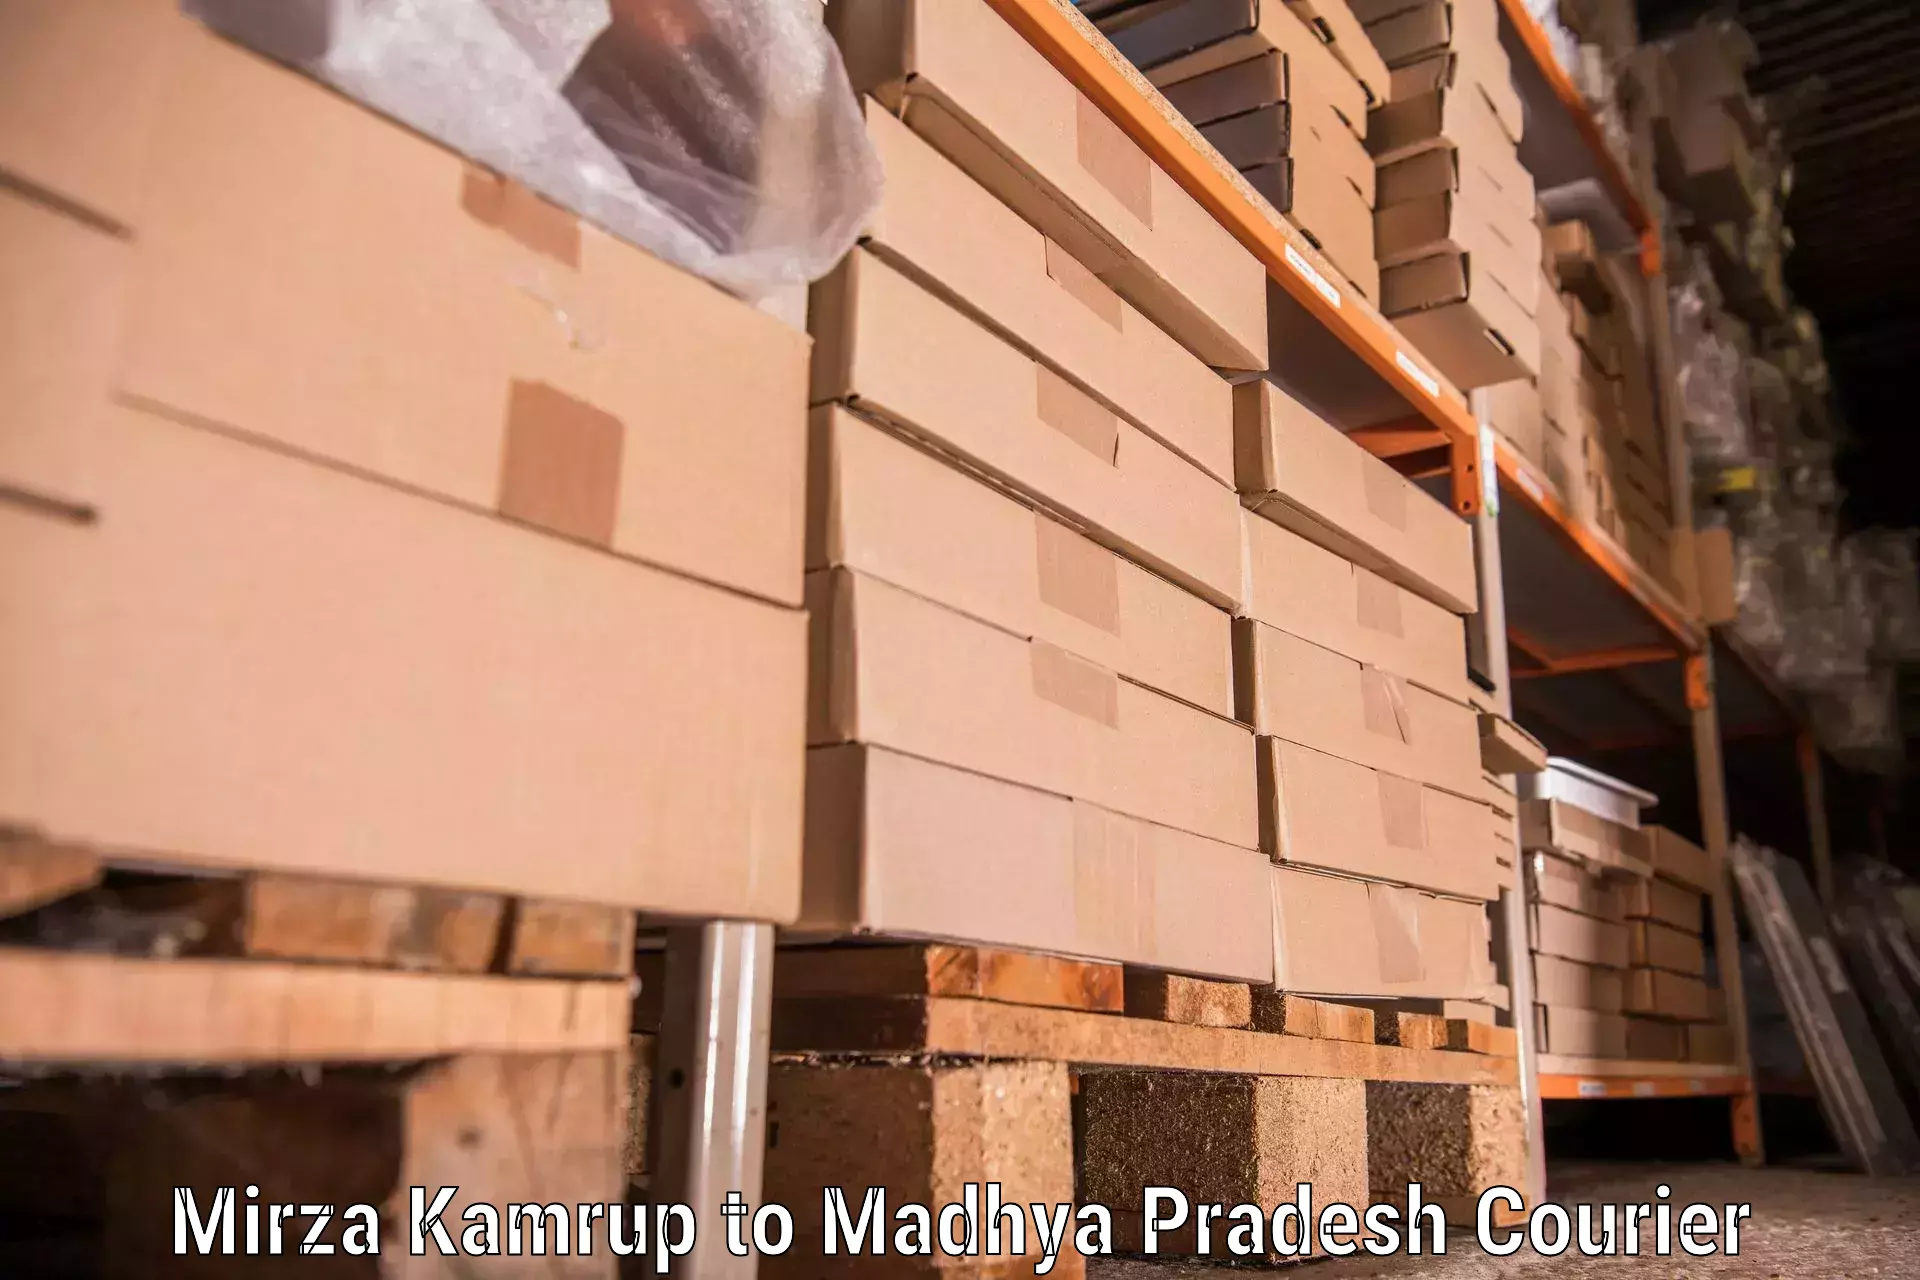 Furniture moving experts Mirza Kamrup to Raipur Karchuliyan